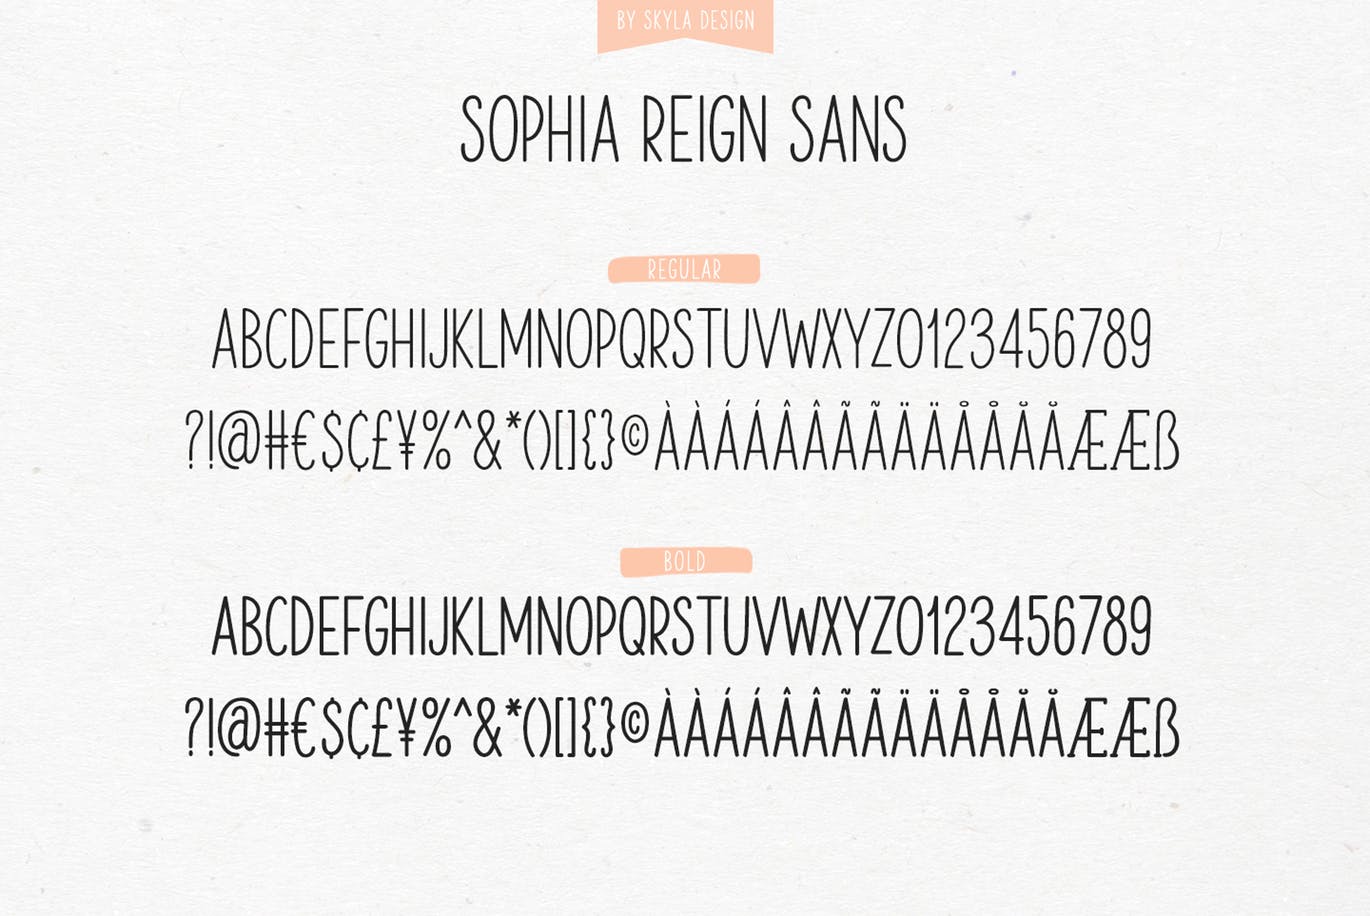 英文钢笔签名字体16设计素材网精选&大写字母正楷字体16设计素材网精选二重奏 Sophia Reign signature font duo插图(1)